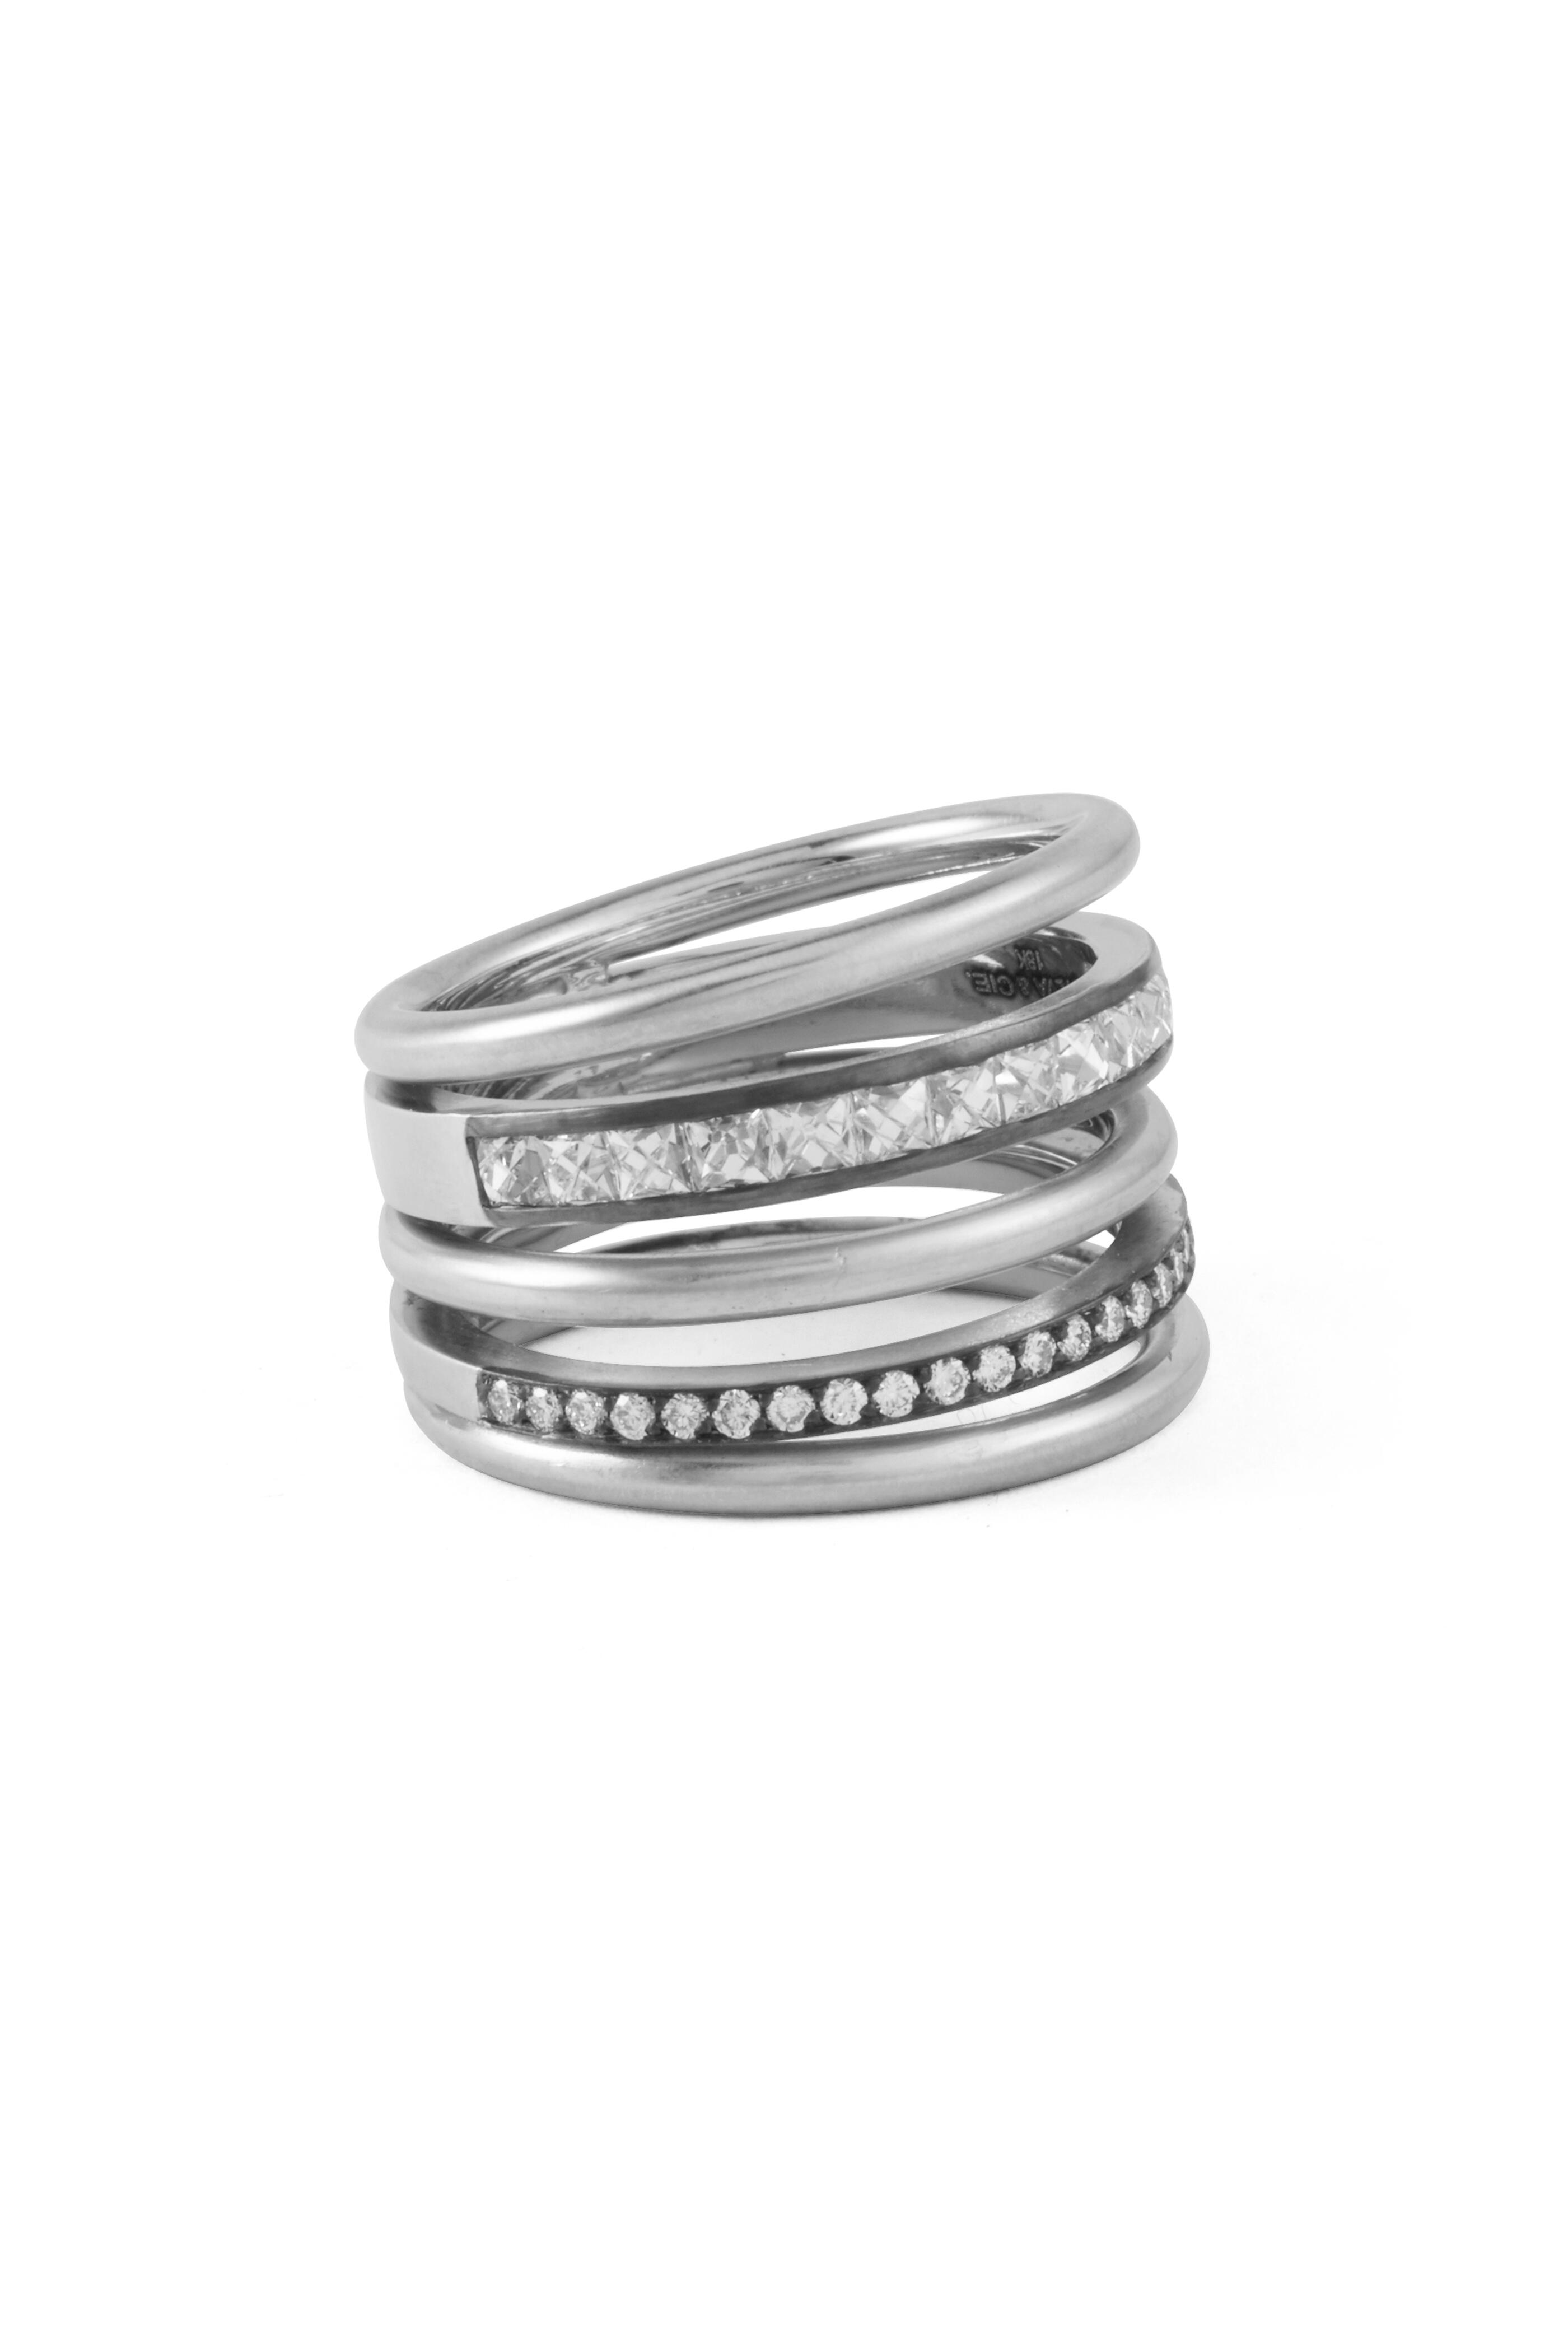 Sylva & Cie - Spiral French Cut Diamond Ring | Mitchell Stores